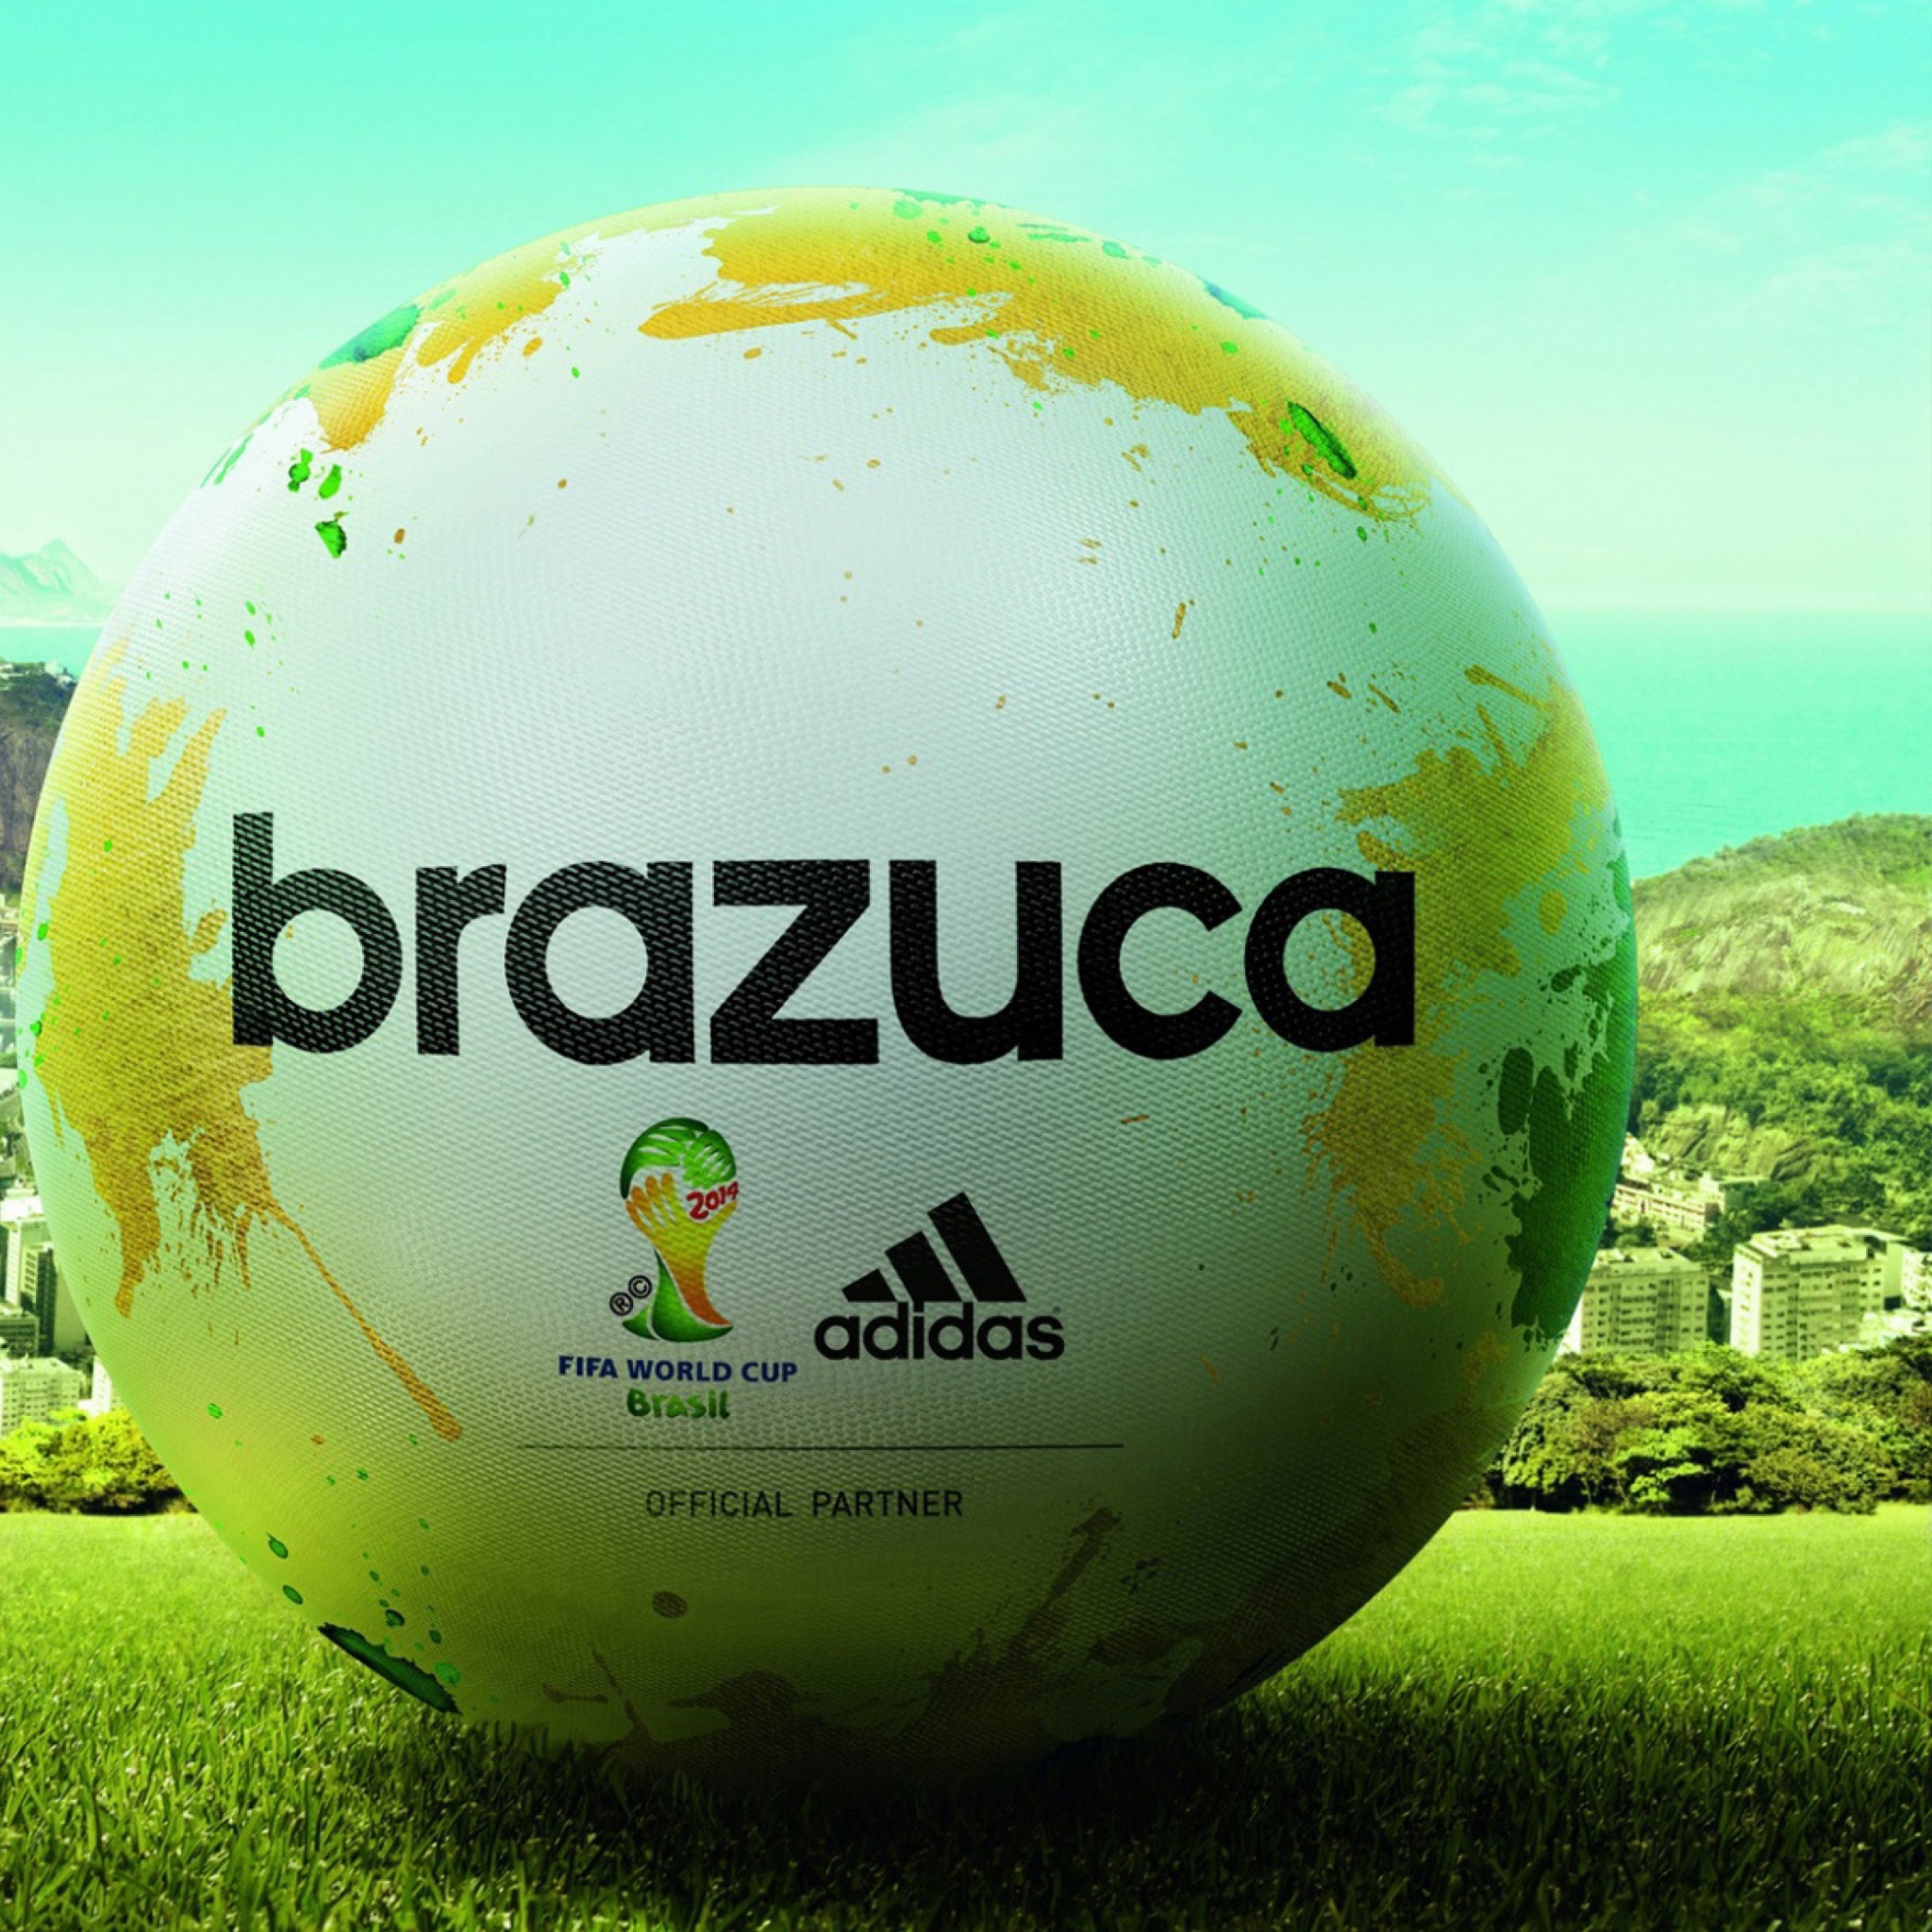 Adidas Brazuca Match Ball FIFA World Cup 2014 wallpaper 2048x2048